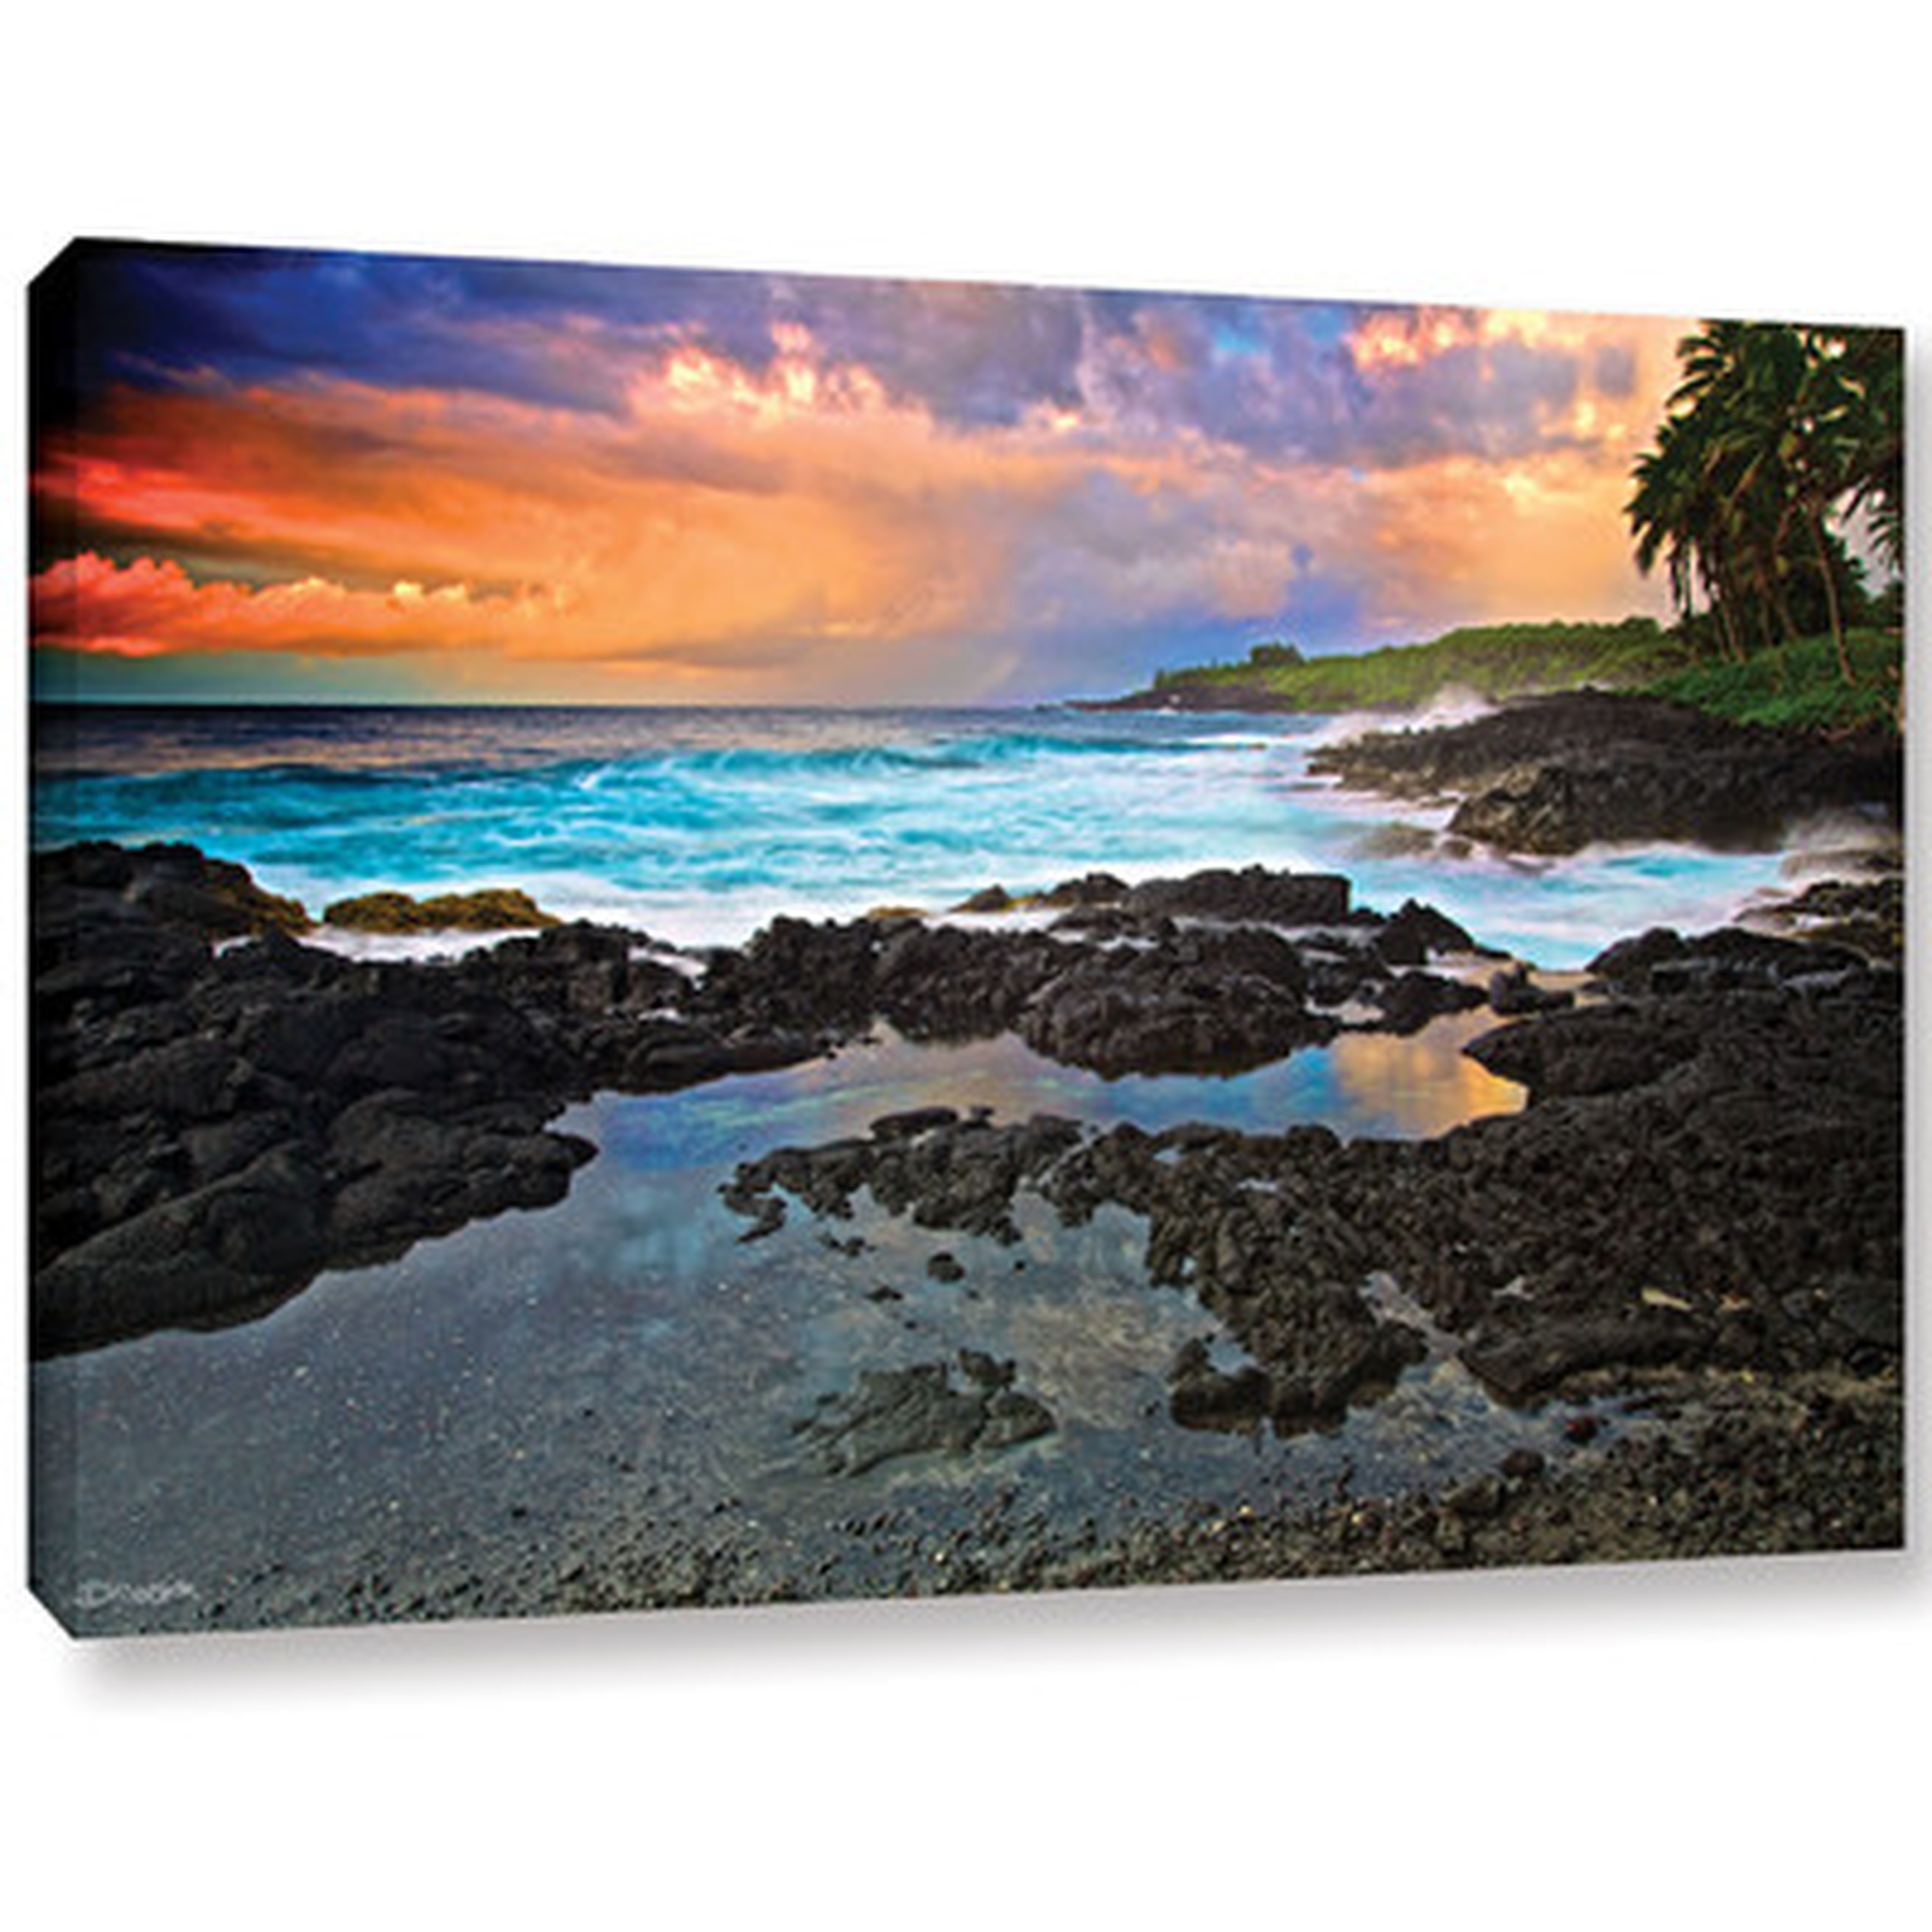 Hawaiian Pools Photographic Print on Wrapped Canvas - Wayfair